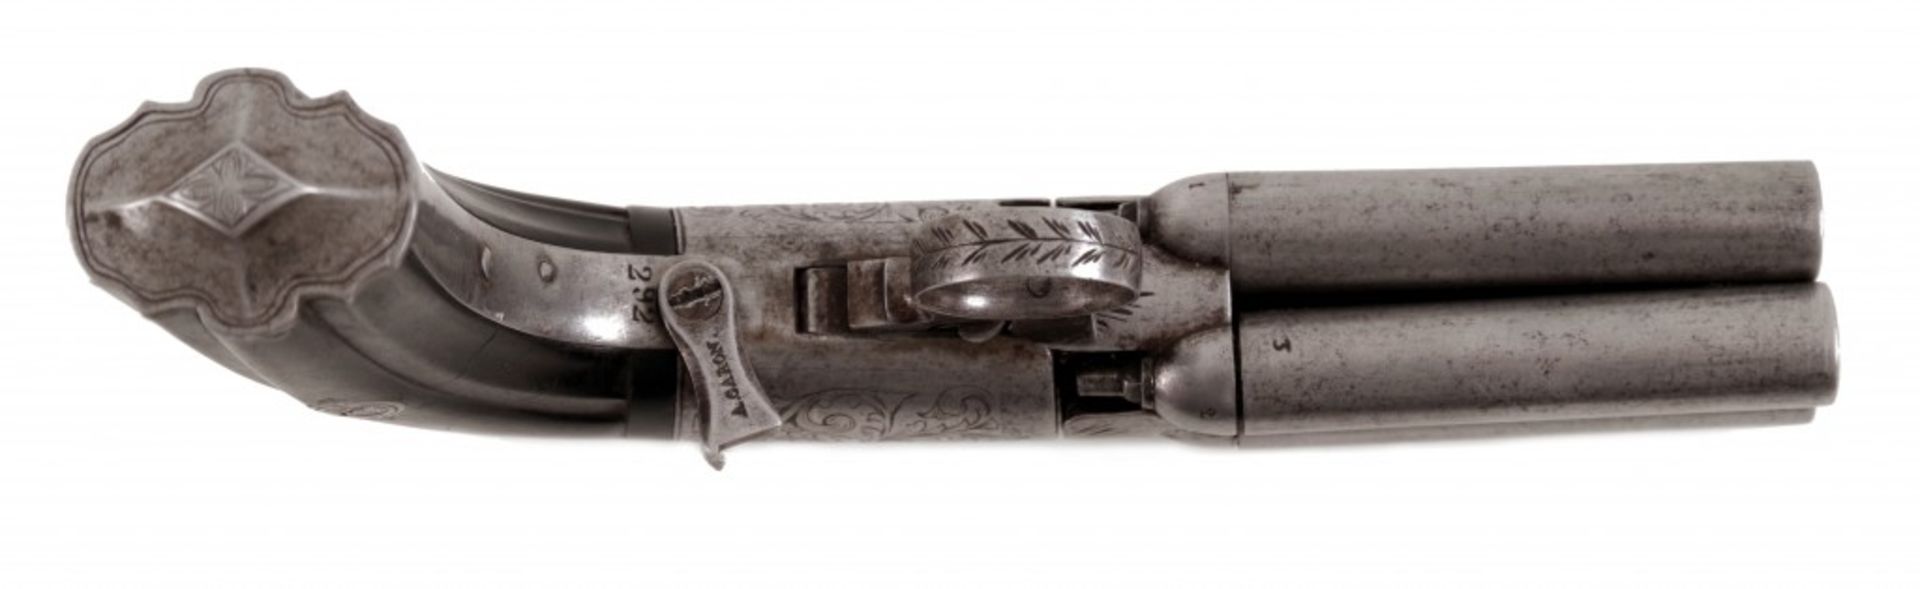 Pepperbox Pistol by Alphonse Caron - Image 4 of 4